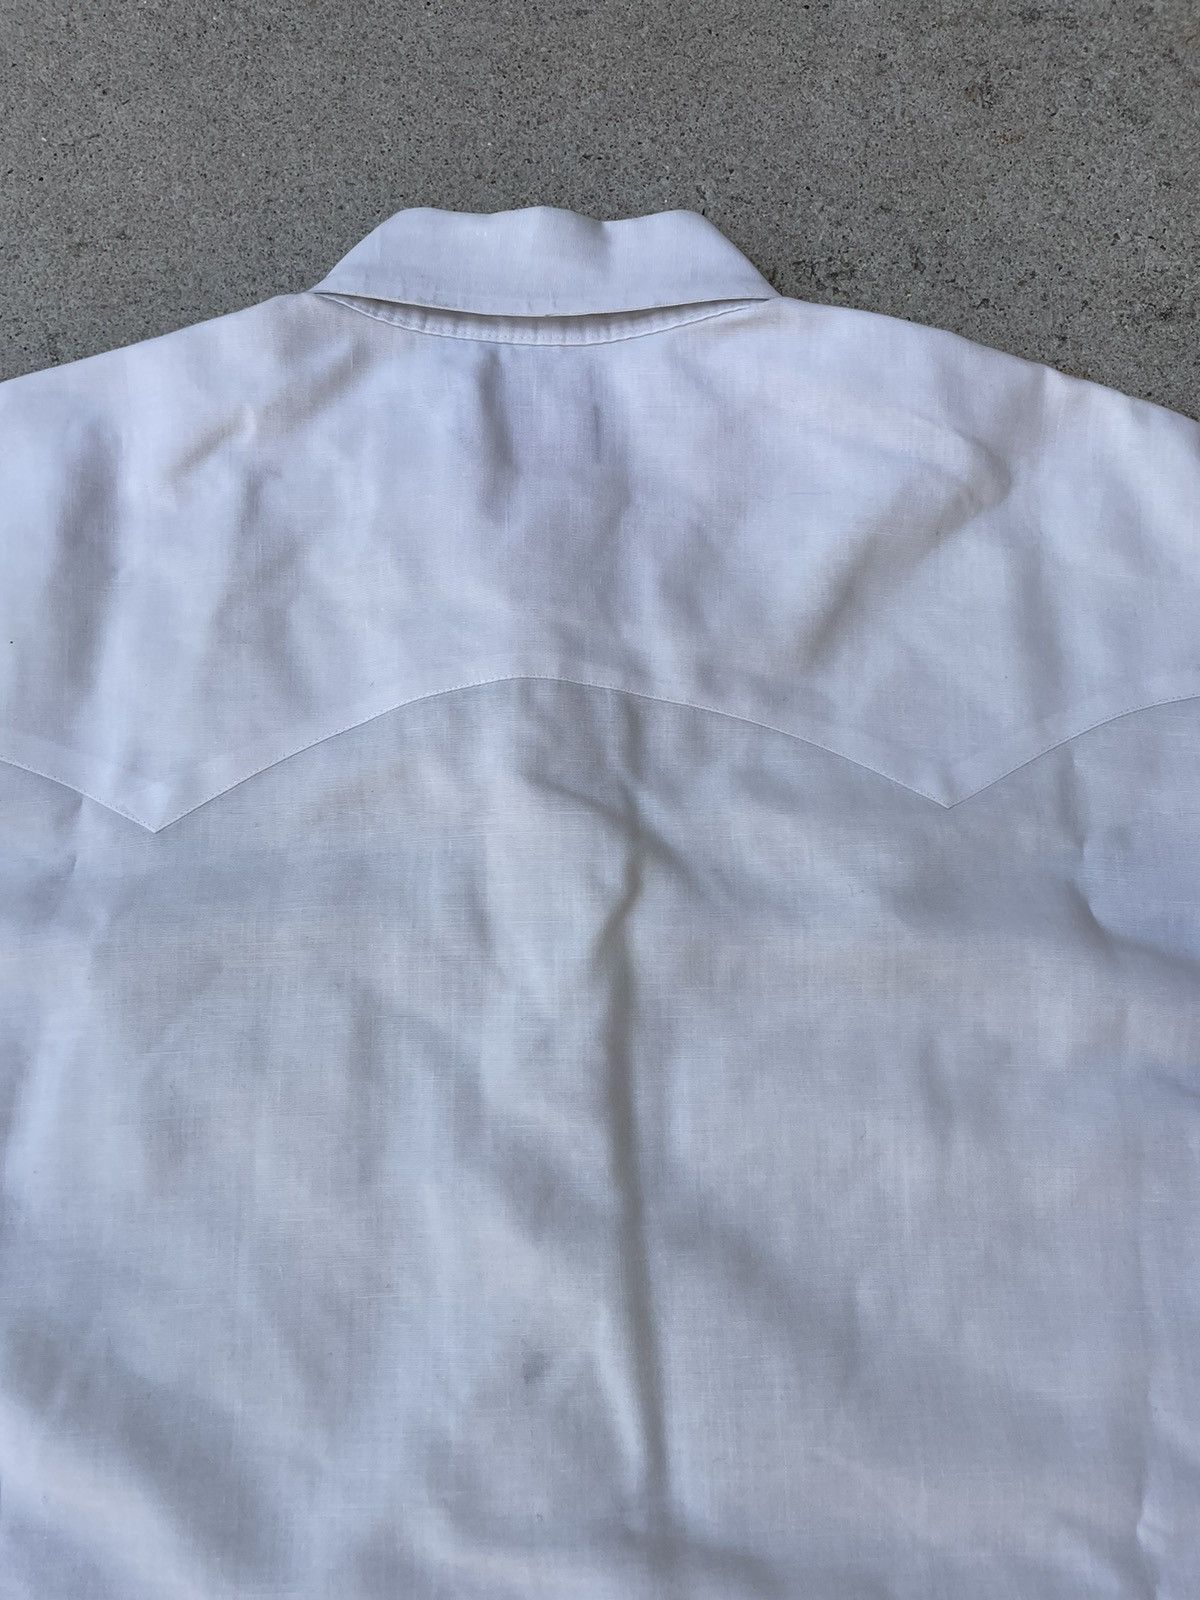 Vintage Vtg 80s Levis White Tab Western Pearl Snap Buttoned Shirt XL Size US XL / EU 56 / 4 - 8 Thumbnail